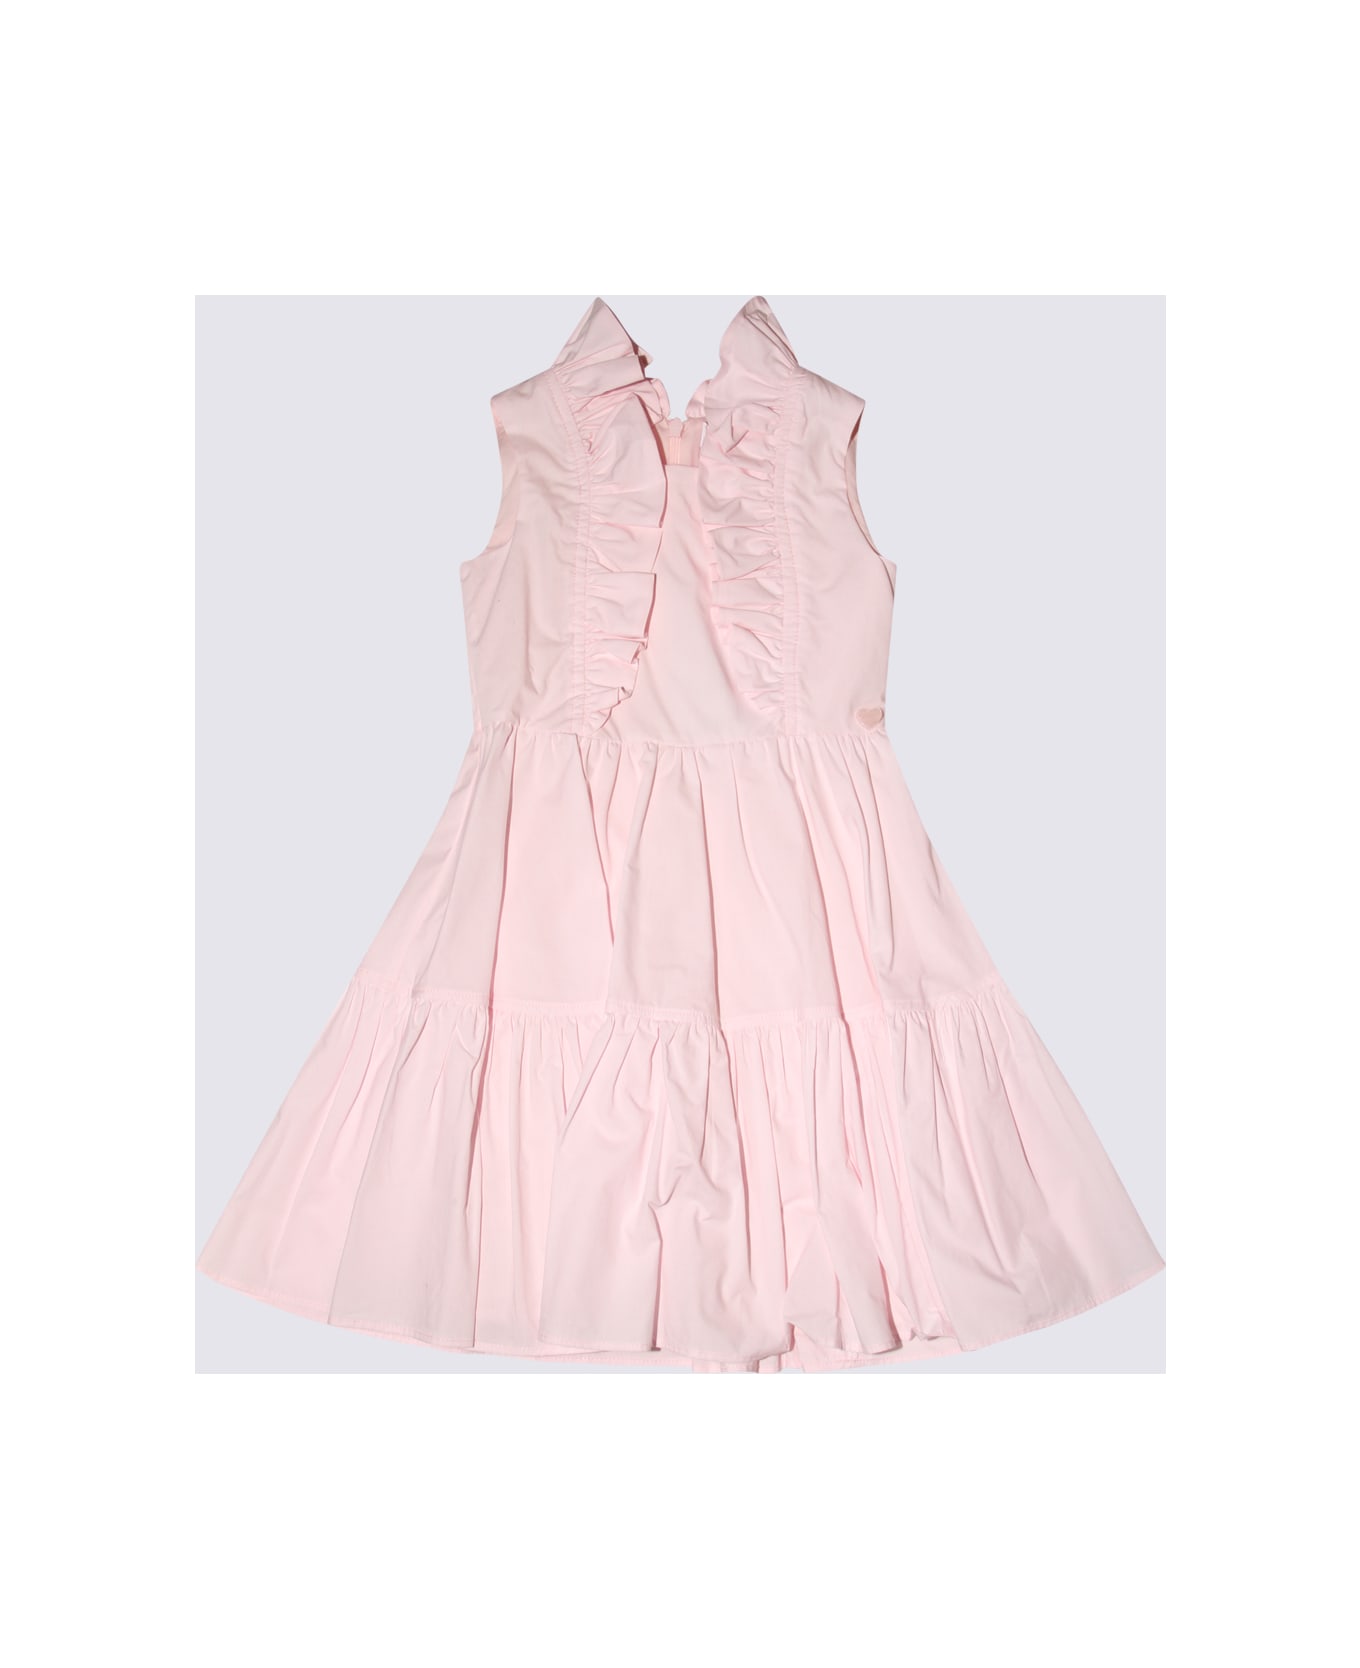 Monnalisa Antique Pink Cotton Dress - Pink ジャンプスーツ